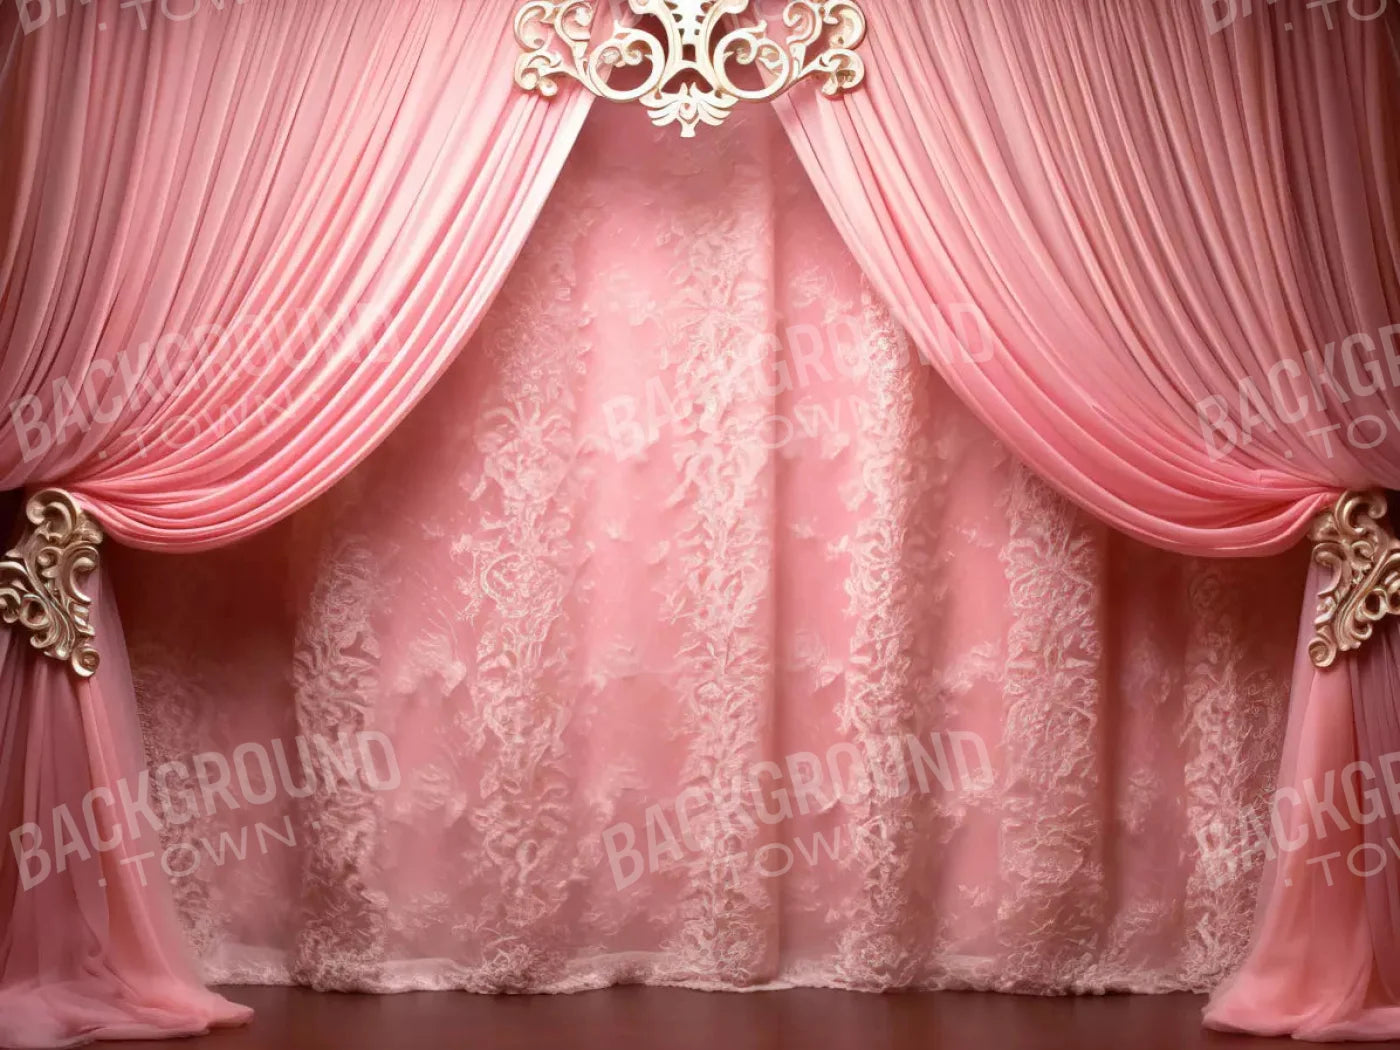 Doll House Curtains 10X8 Fleece ( 120 X 96 Inch ) Backdrop